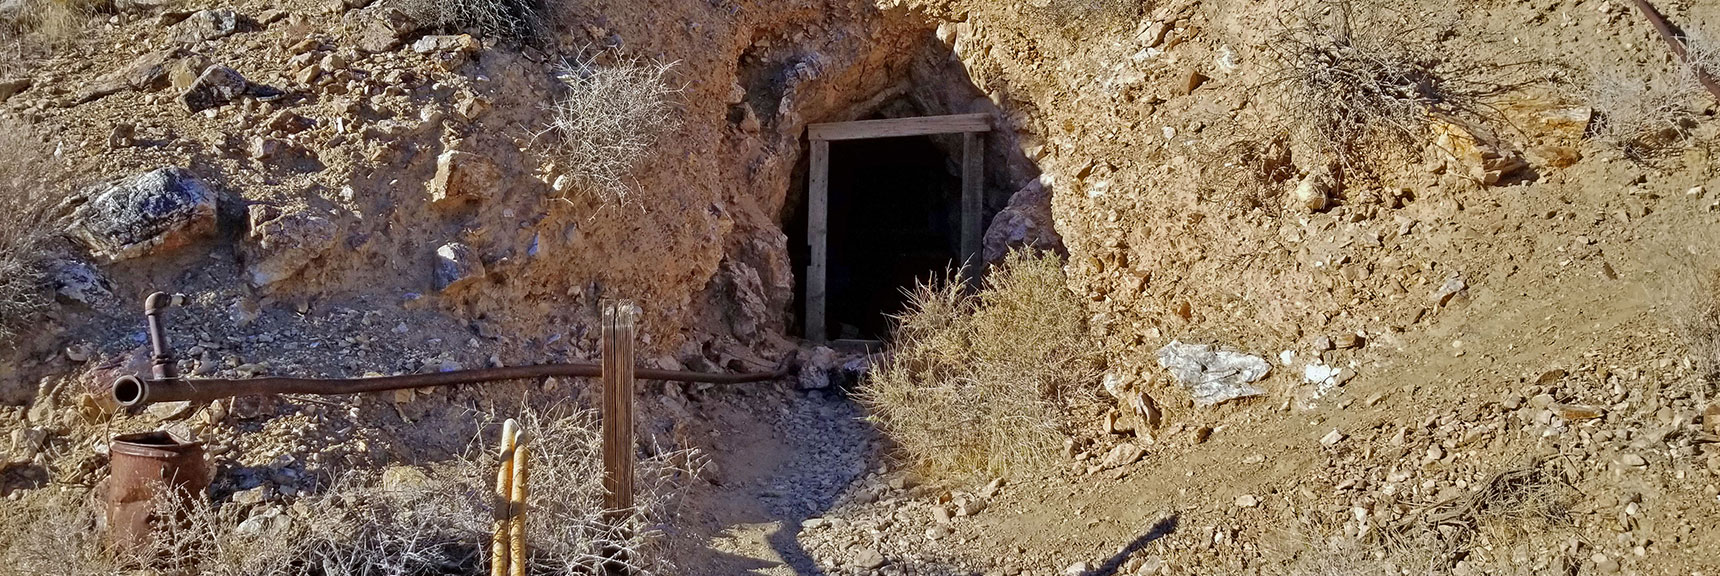 Approaching Entrance to Eureka Mine | Eureka Mine, Harrisburg, Cashier Mill, Death Valley, California